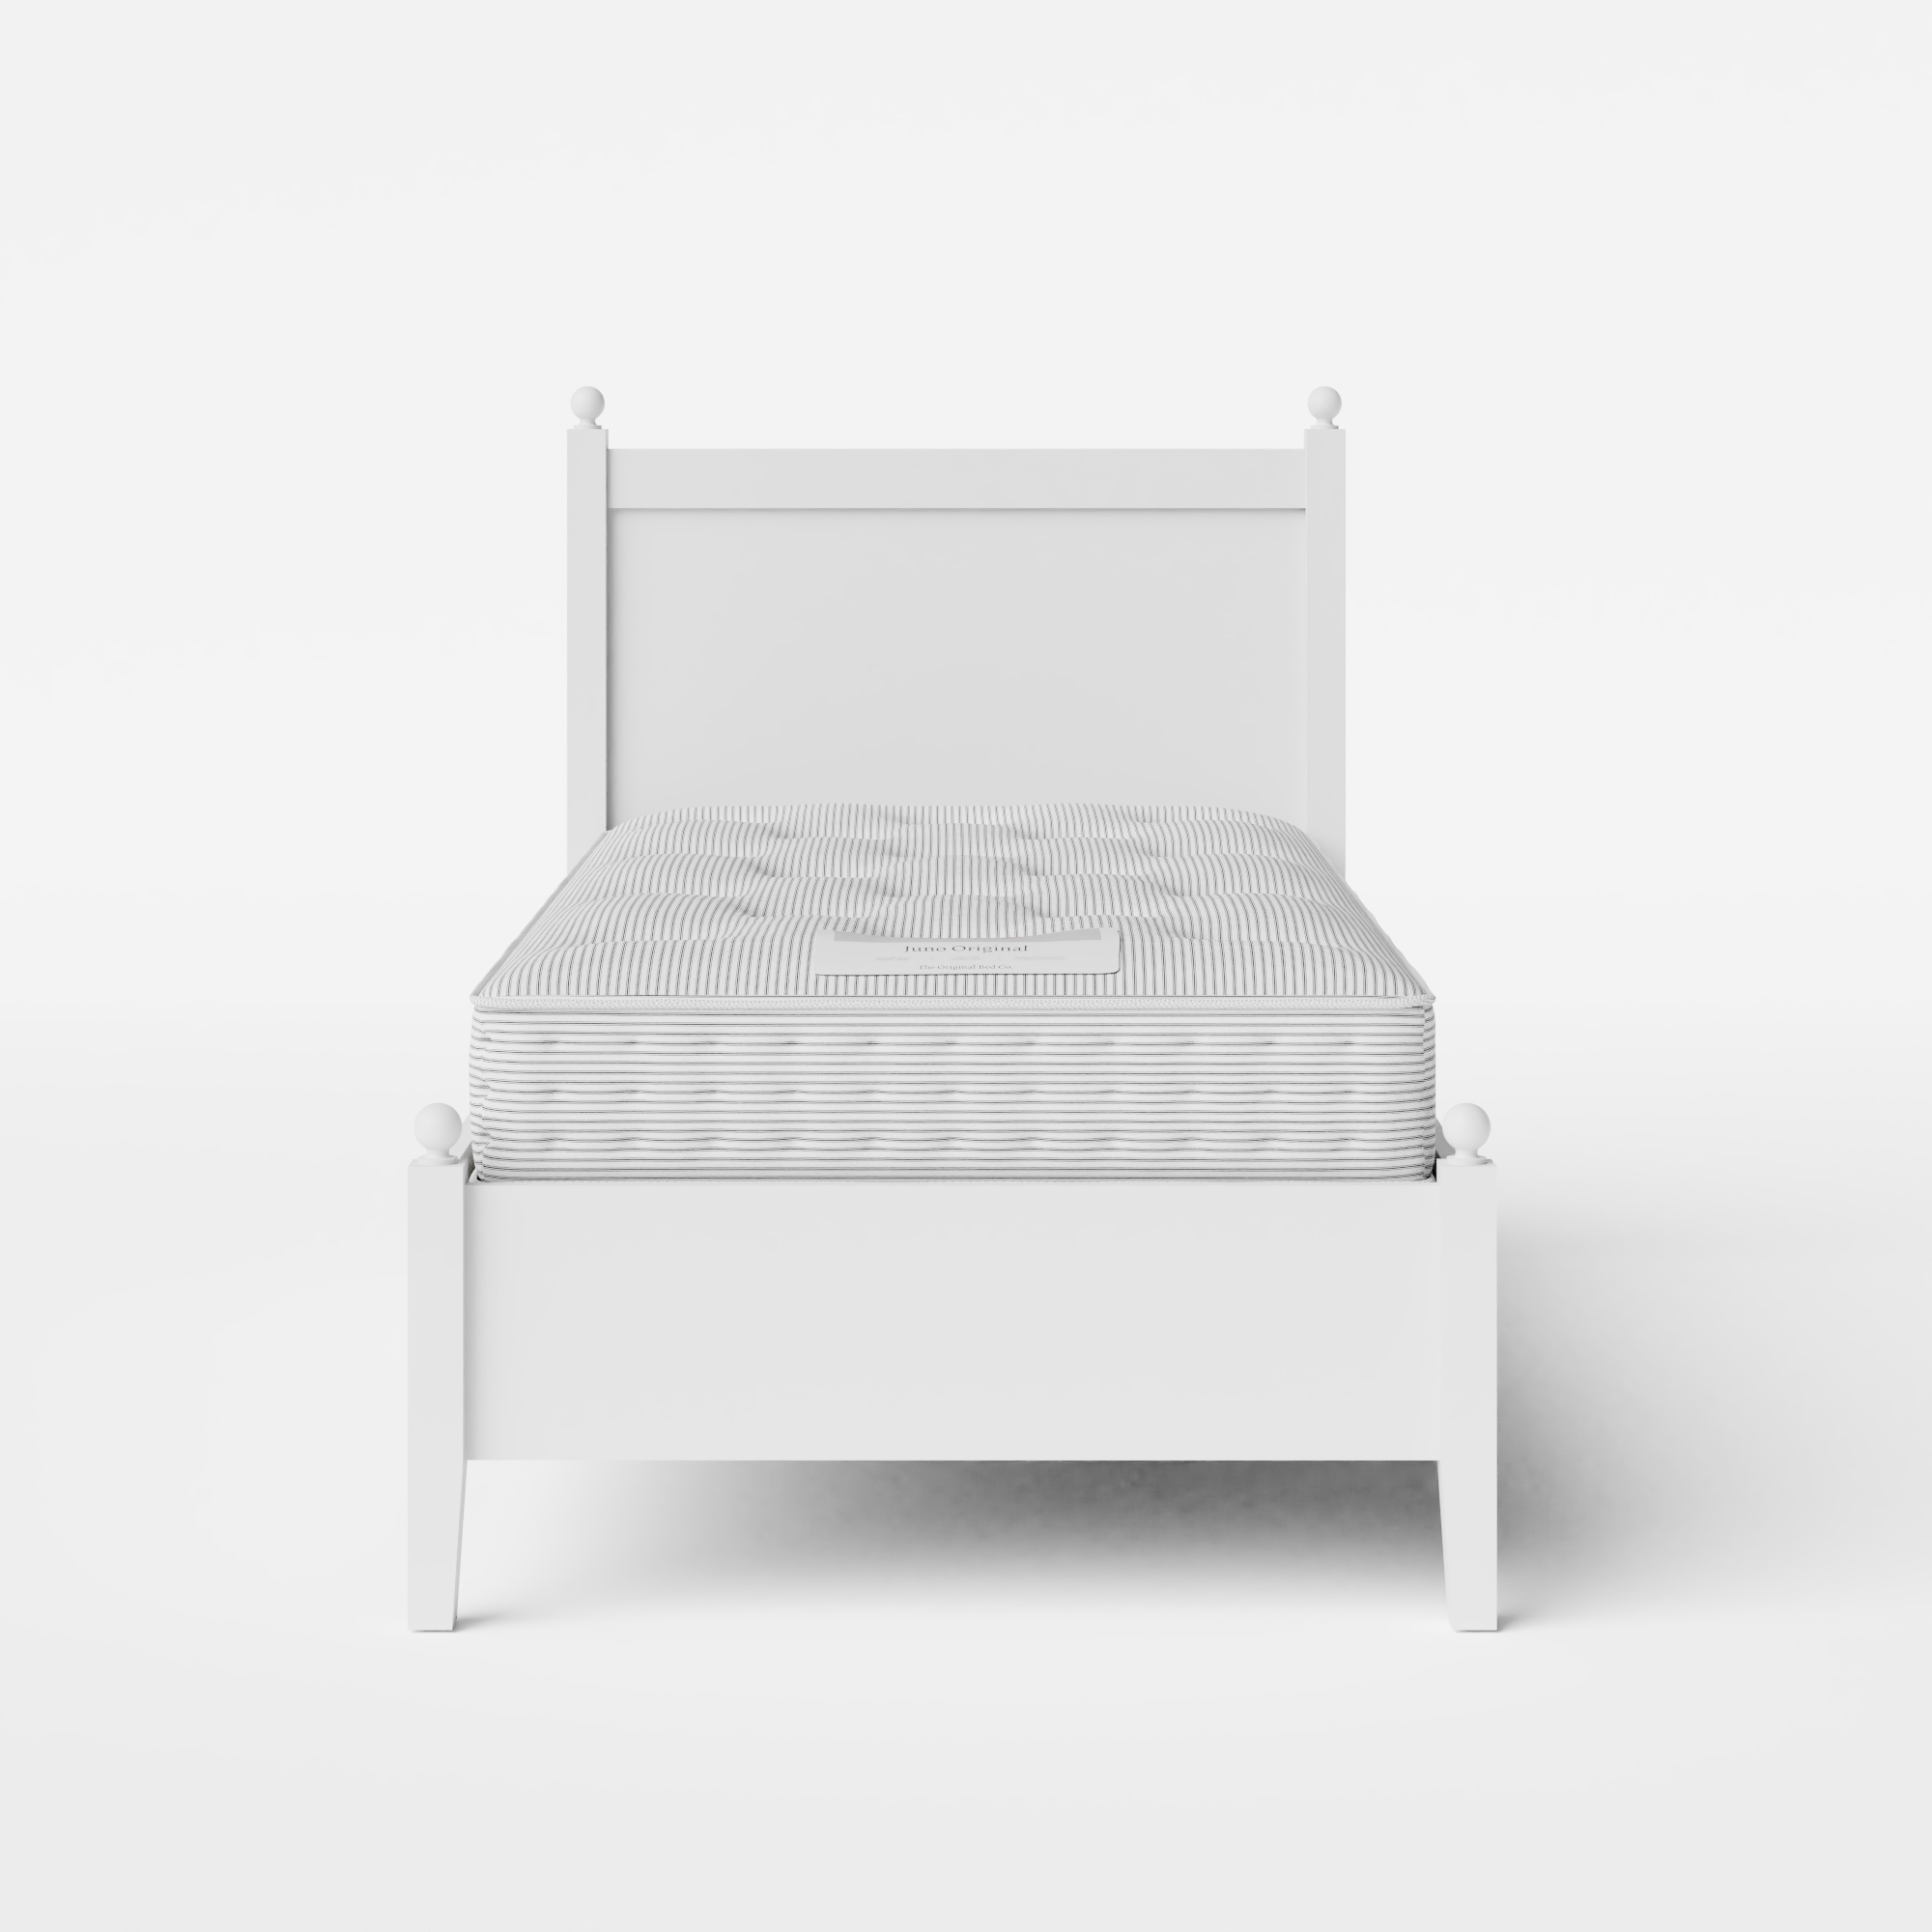 Marbella Low Footend Painted lit simple en bois peint en blanc avec matelas